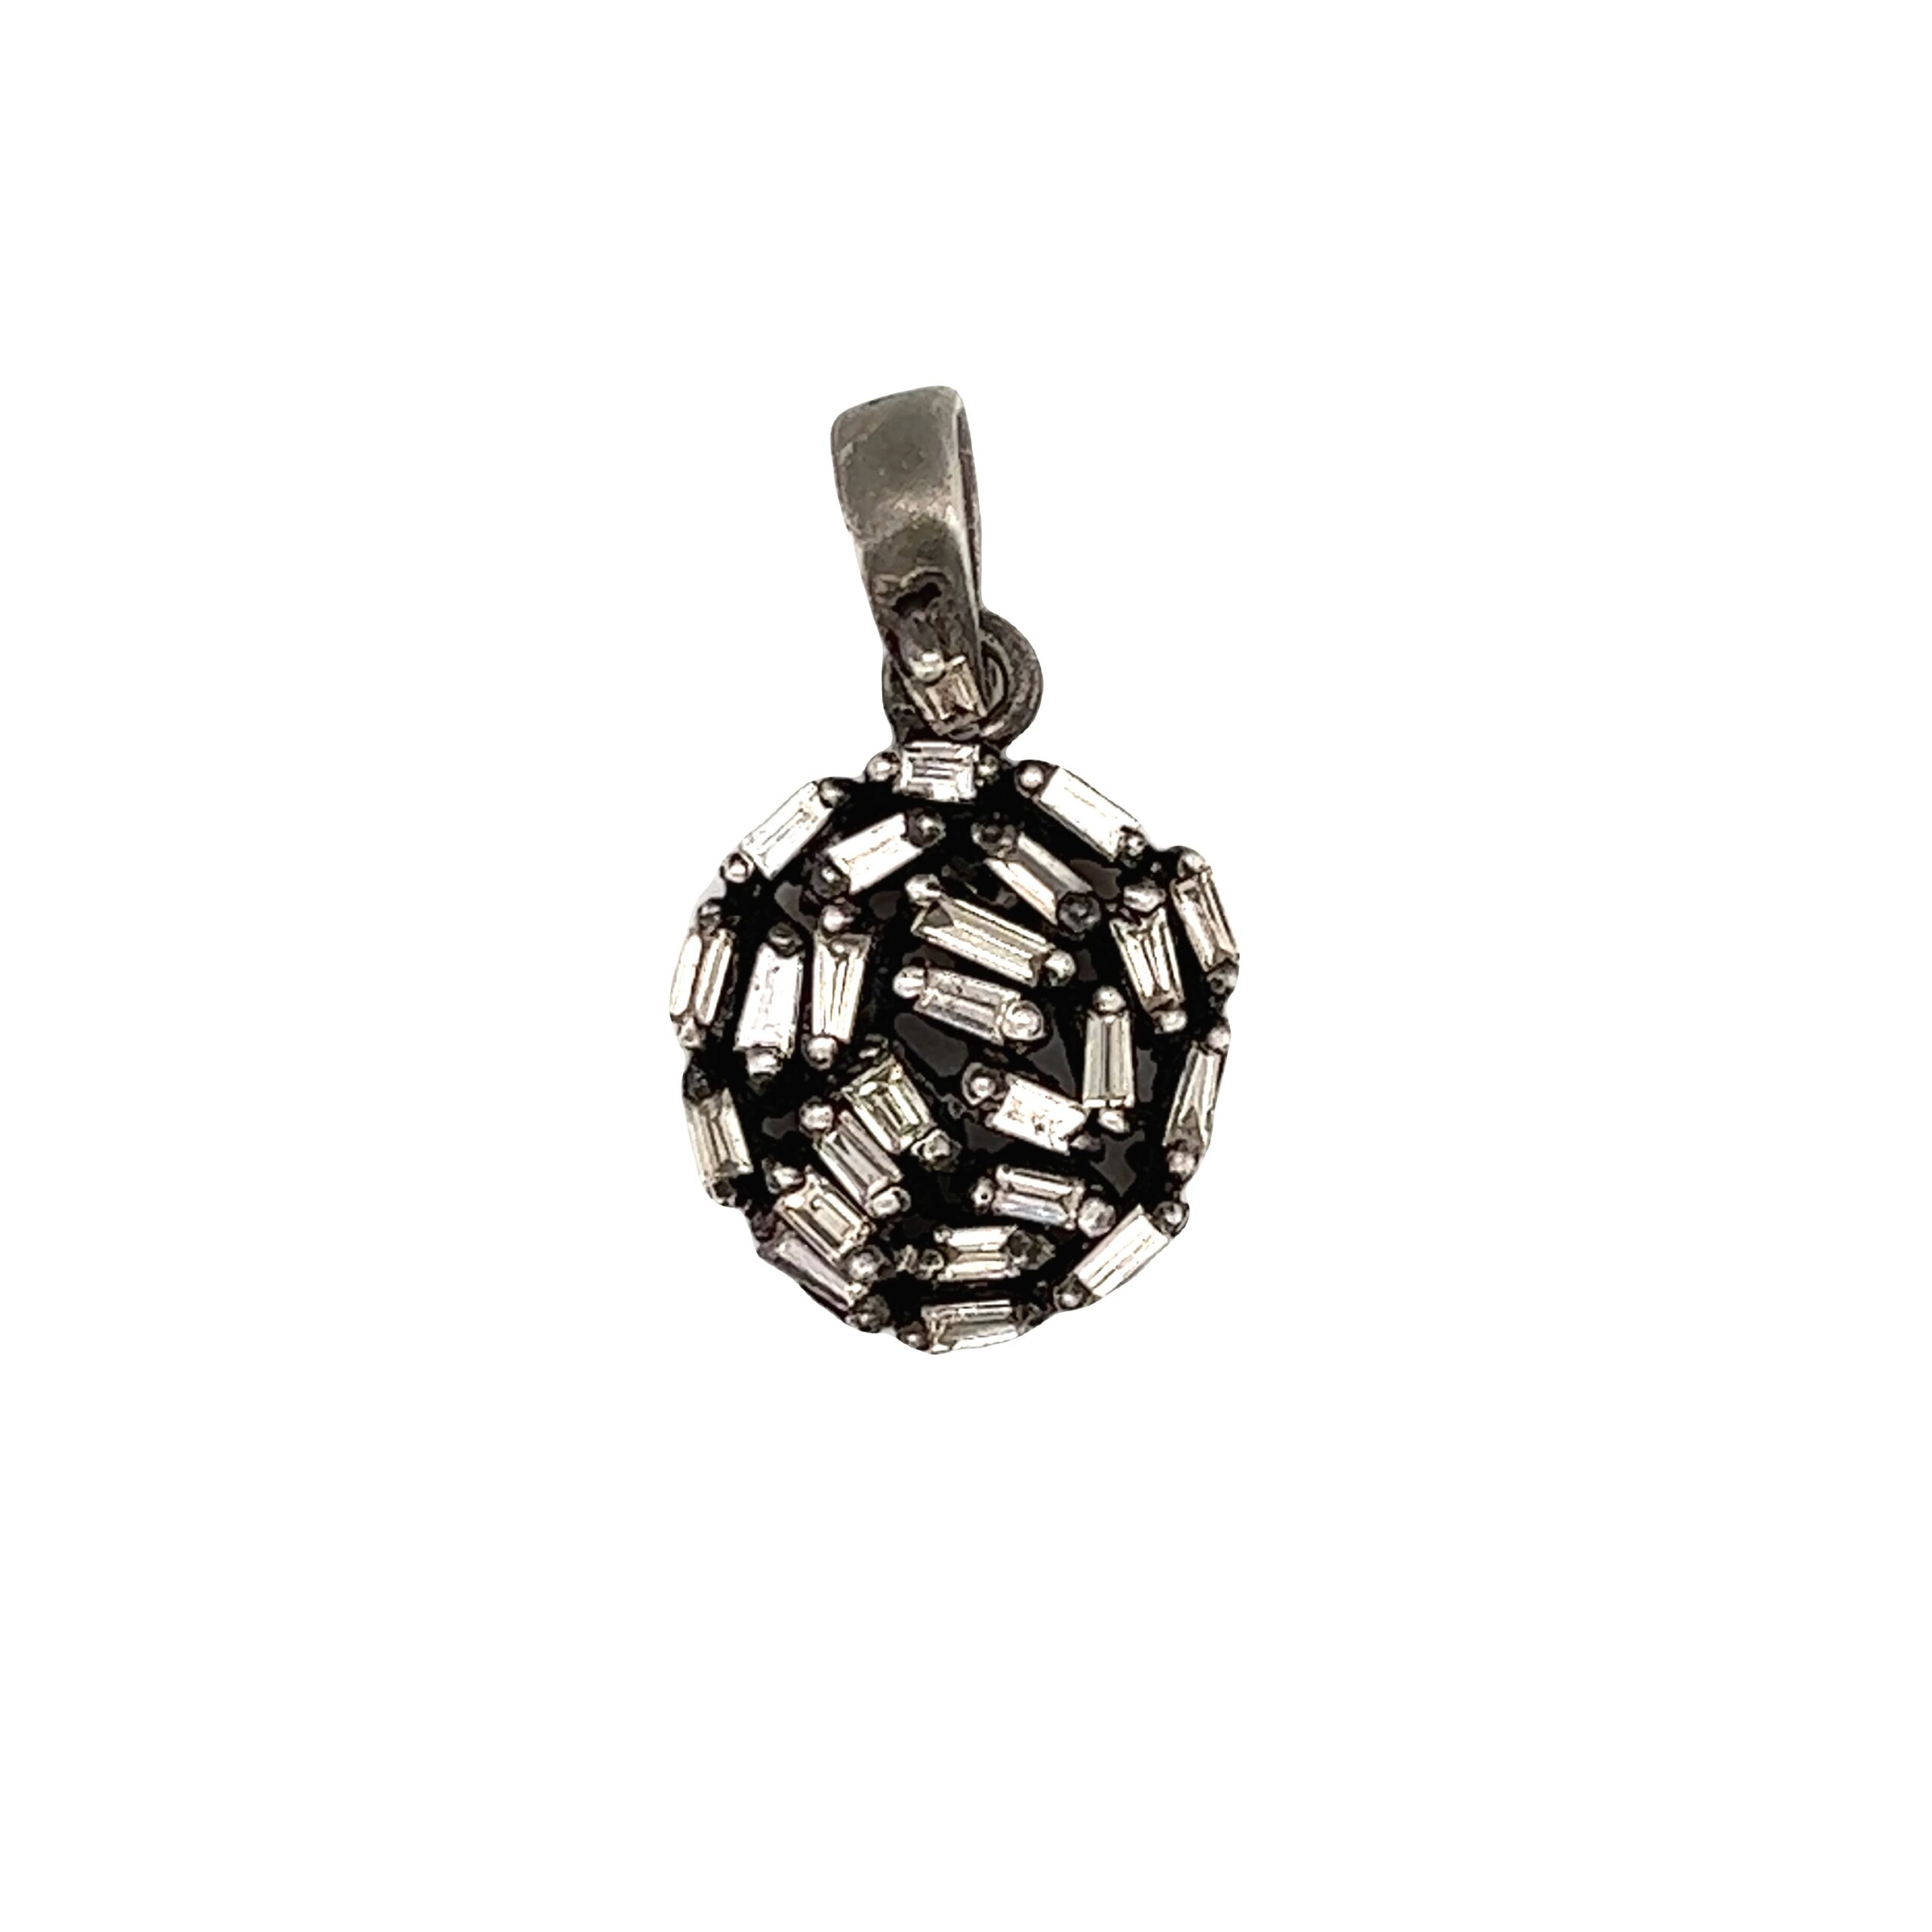 Featured image for “Diamond Baguette Pendant”